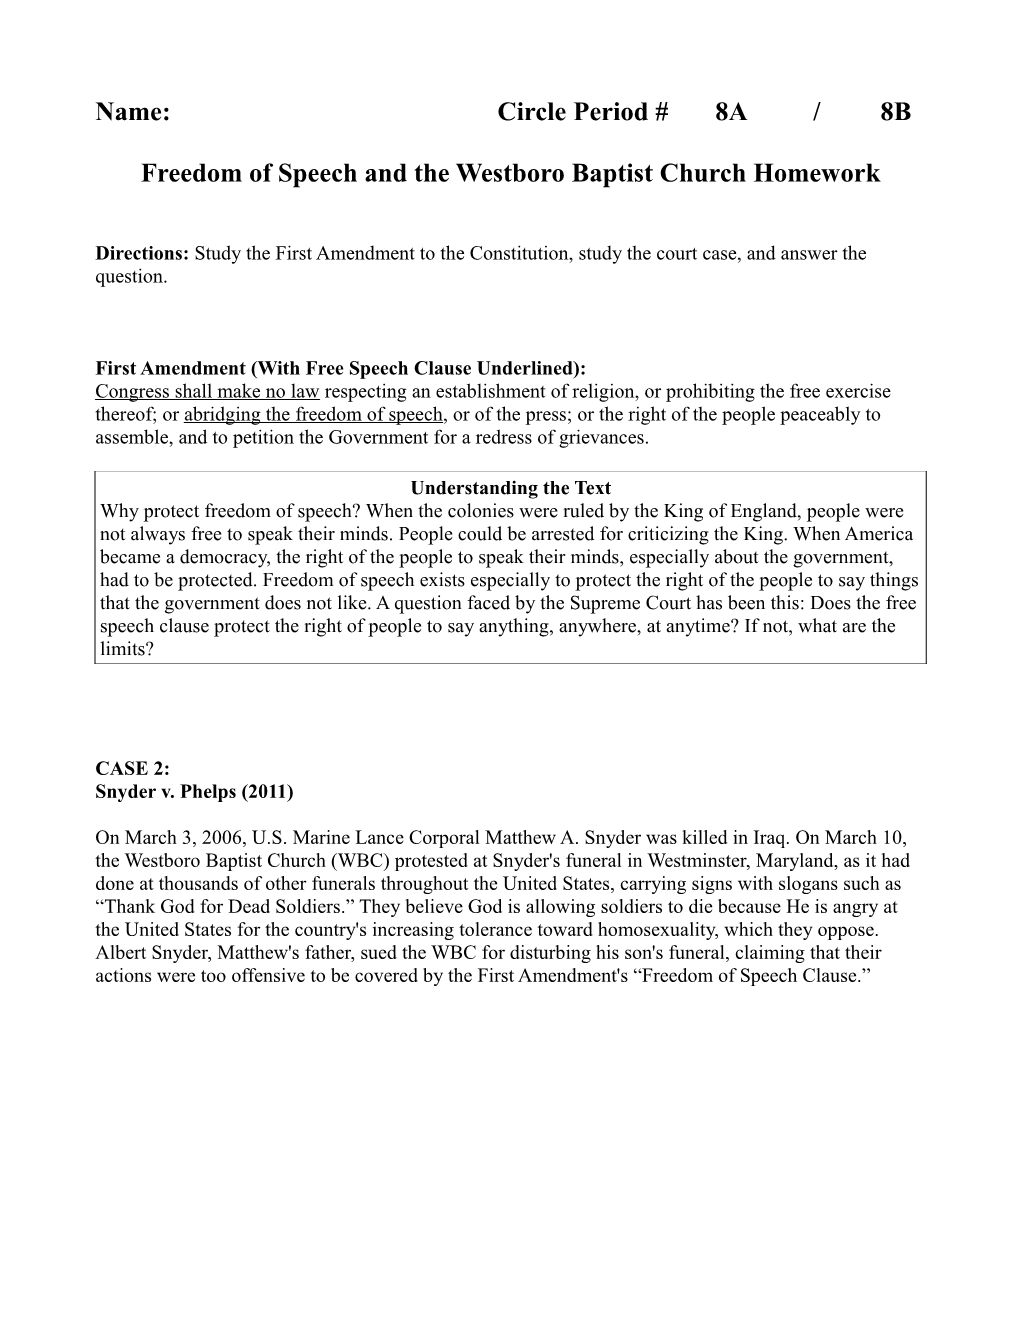 Freedom of Speech and the Westboro Baptist Church Homework